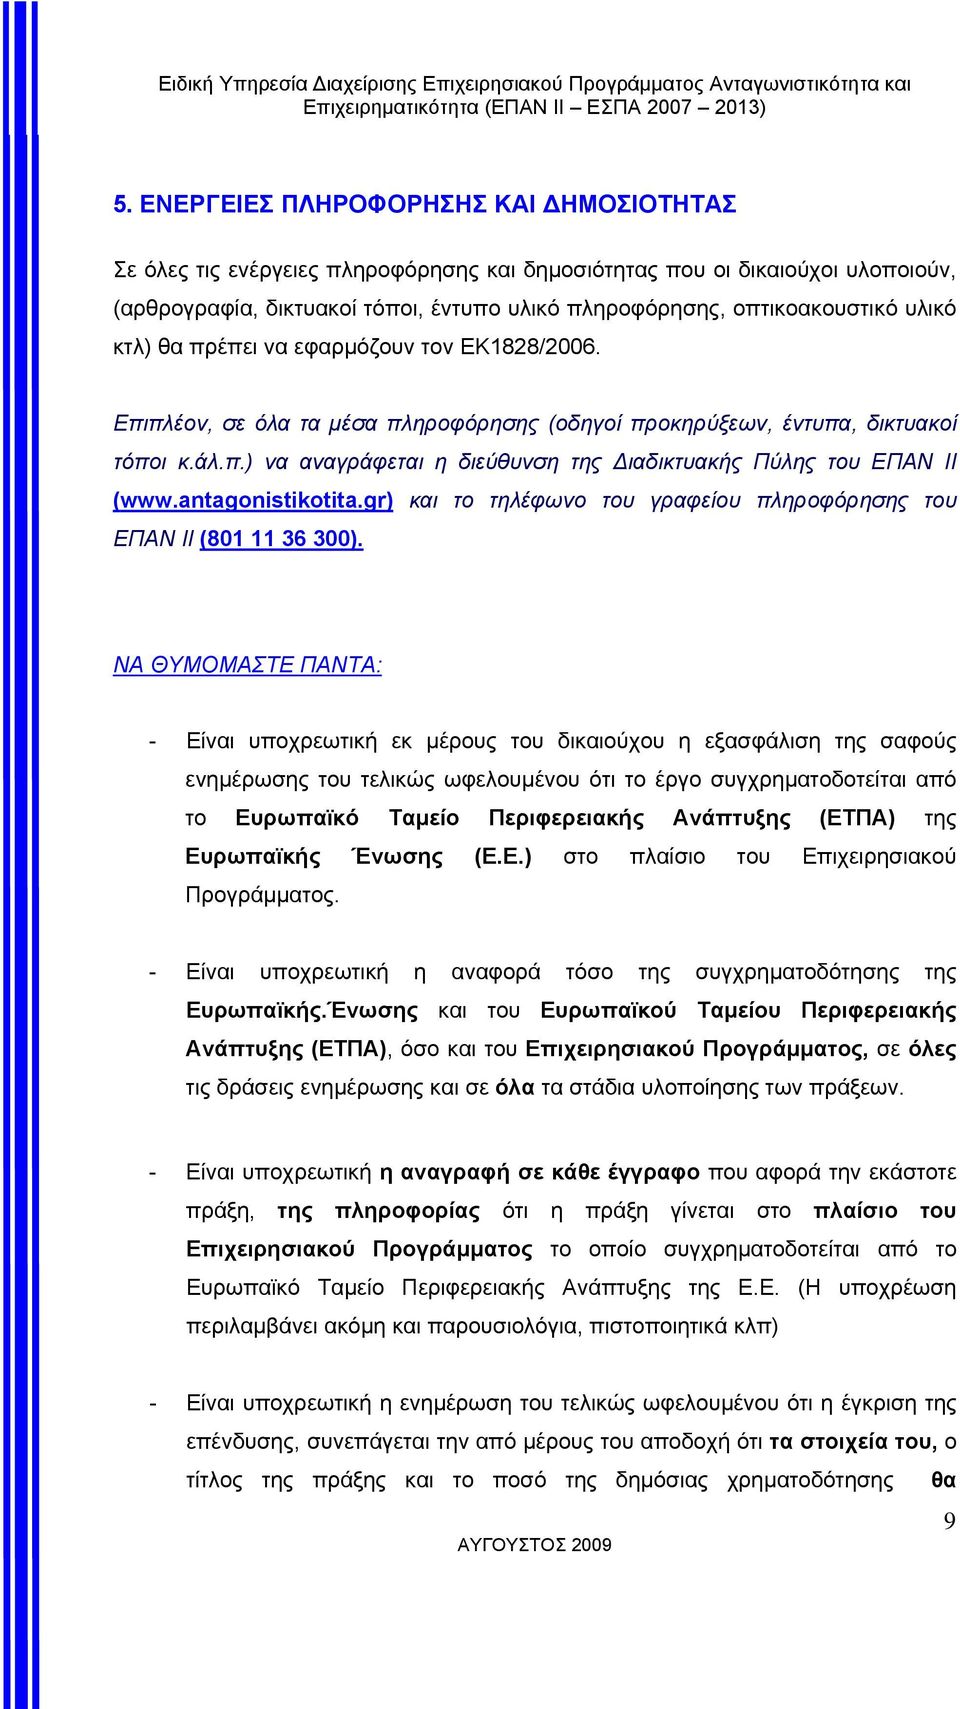 antagnistiktita.gr) και το τηλέφωνο του γραφείου πληροφόρησης του ΕΠΑΝ ΙΙ (801 11 36 300).